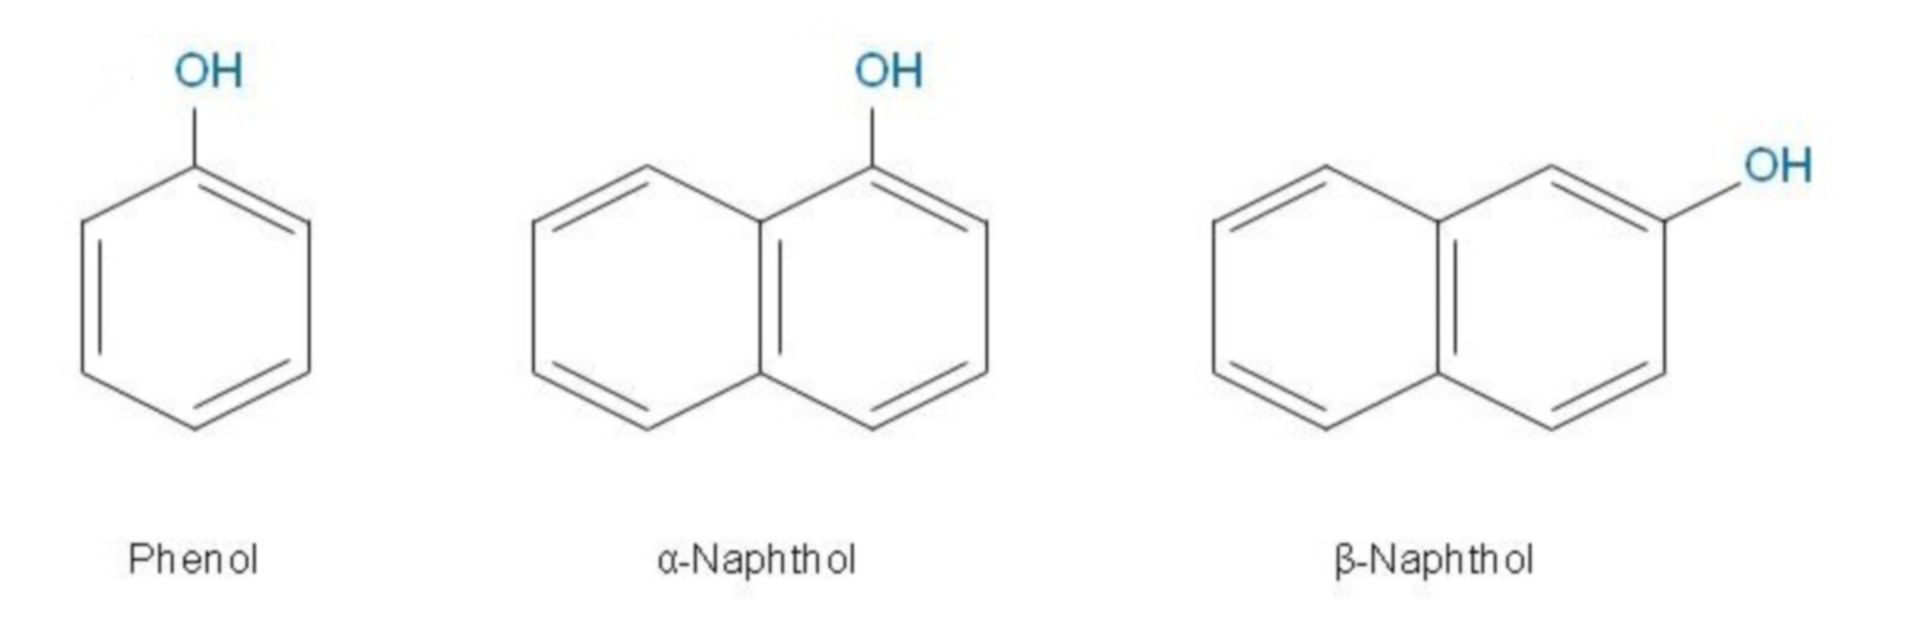 Phenol - alpha-Naphtol - beta-Naphtol